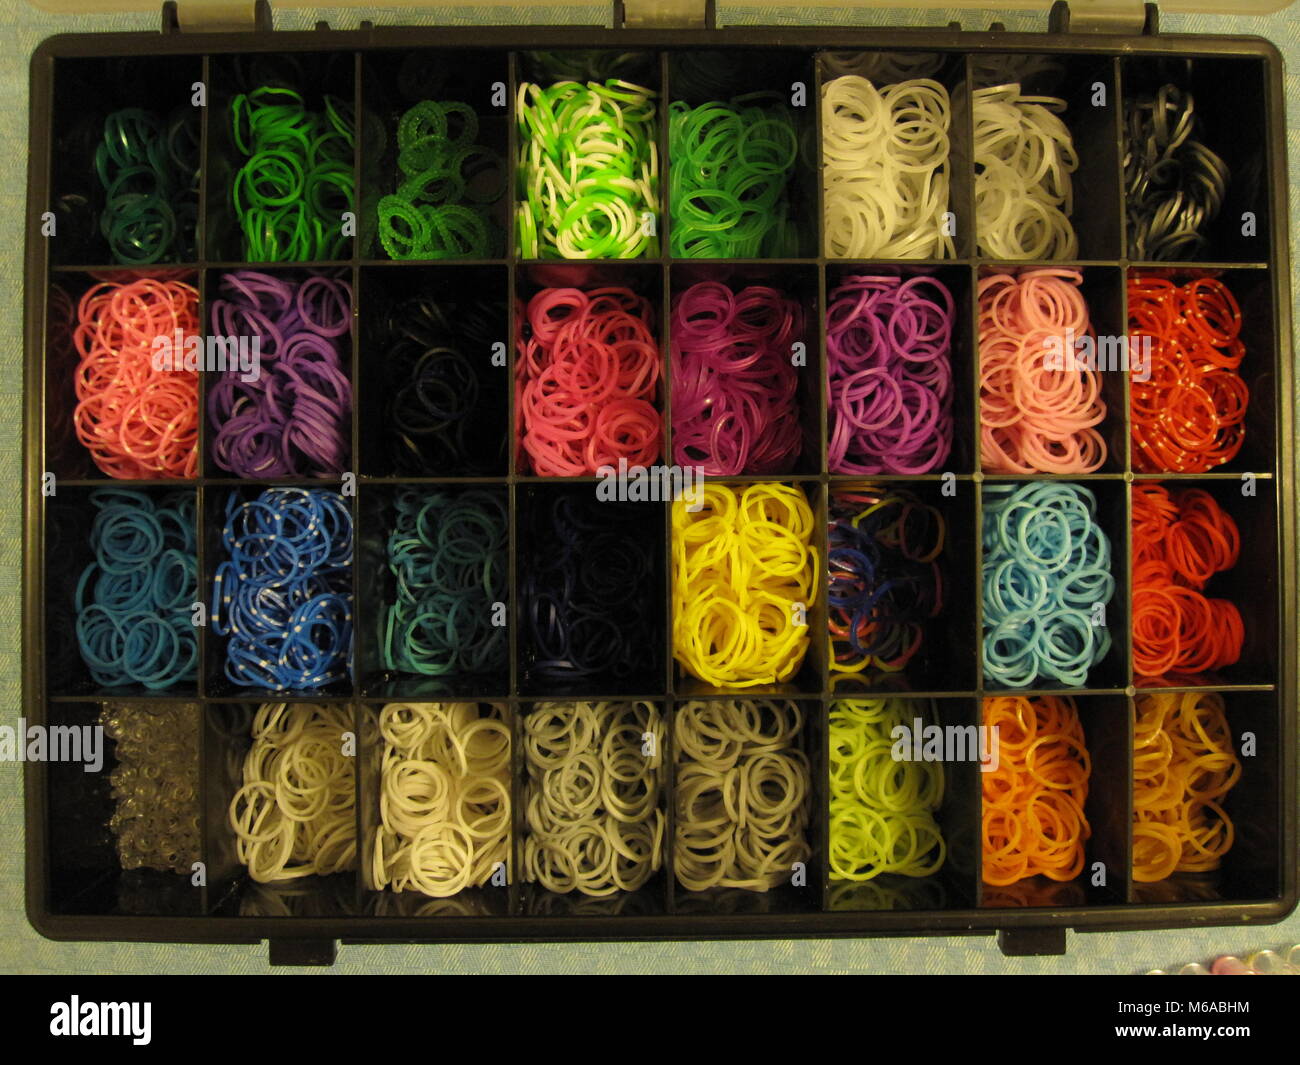 Caixa organizadora com elásticos de cores variadas Stock Photo